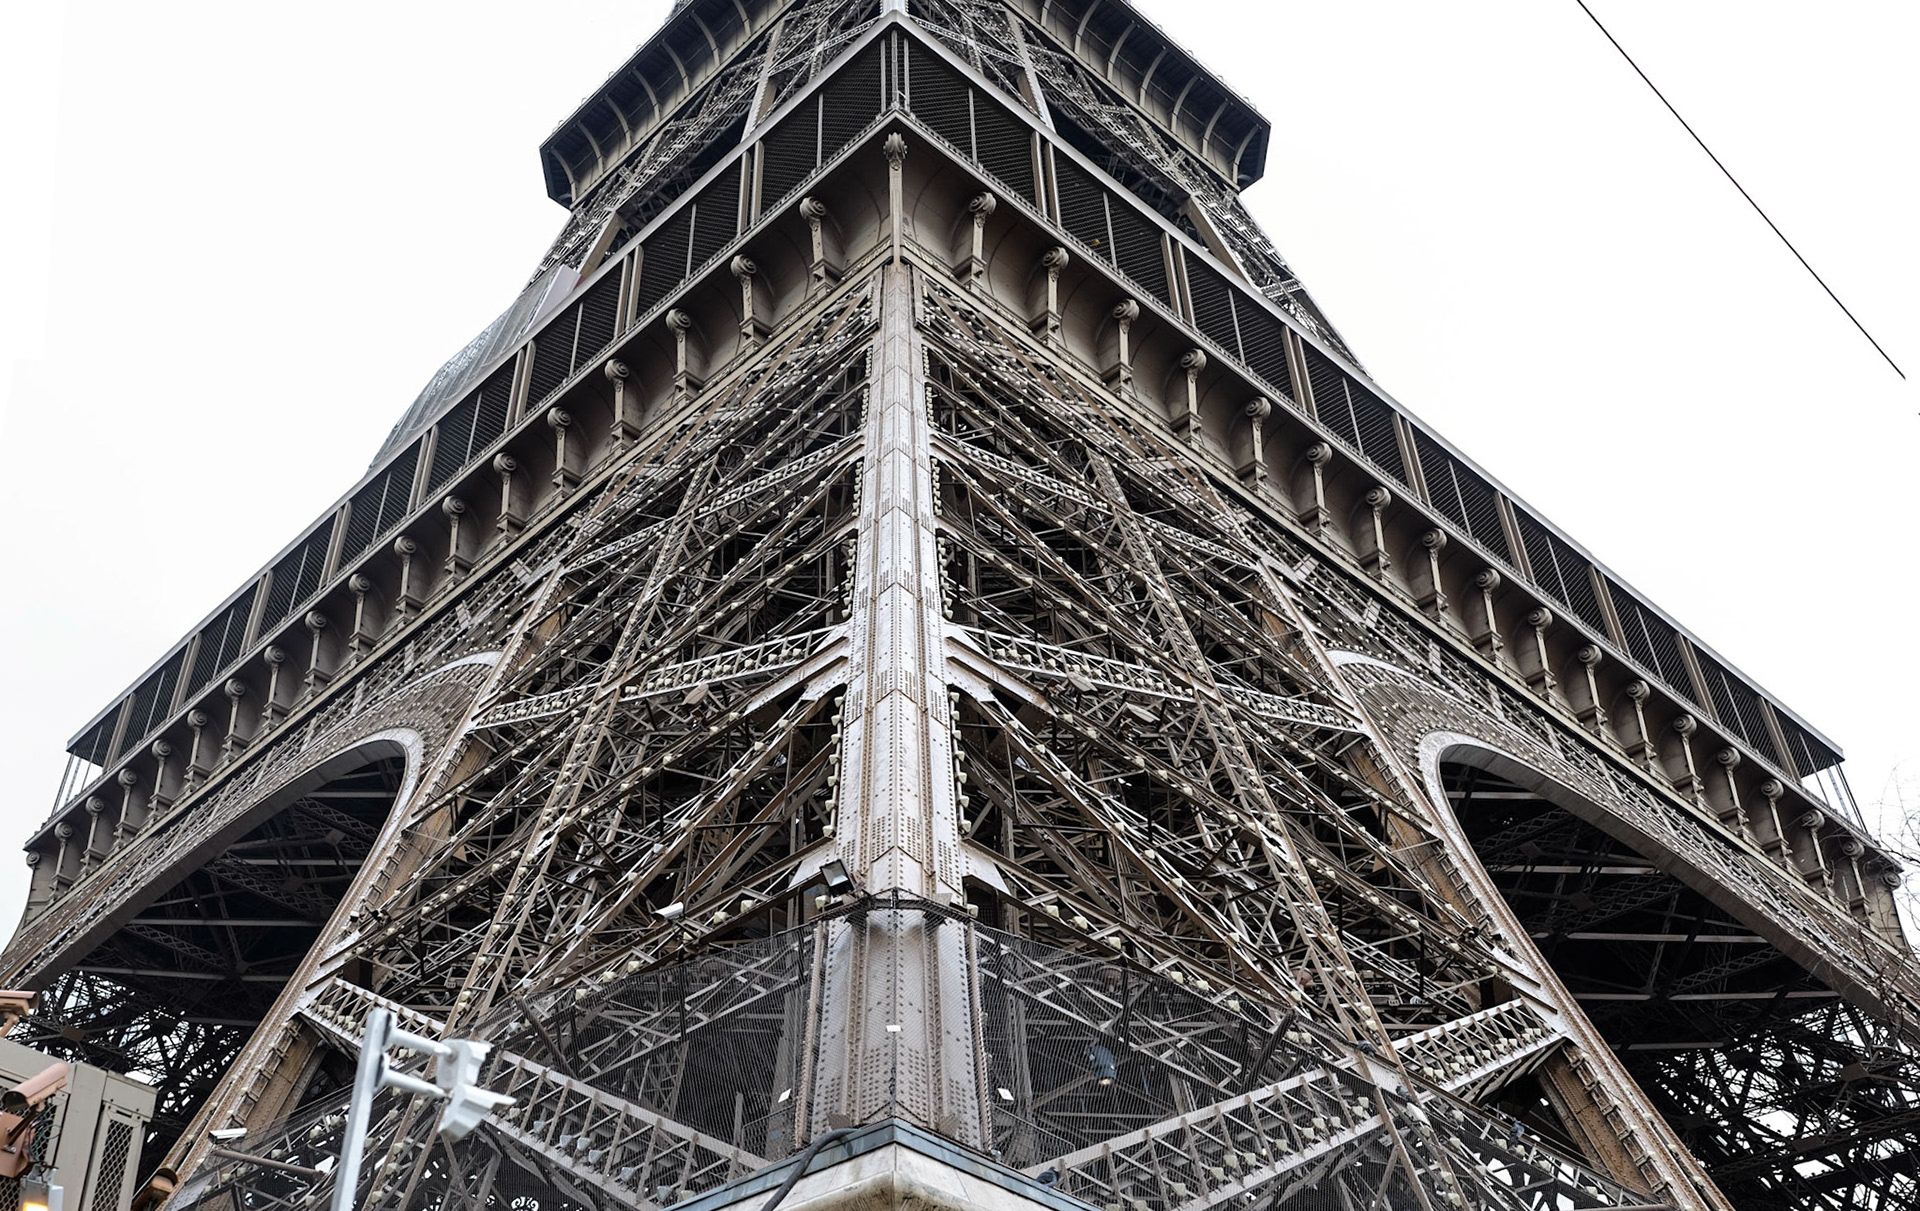 Eiffel Tower lower details